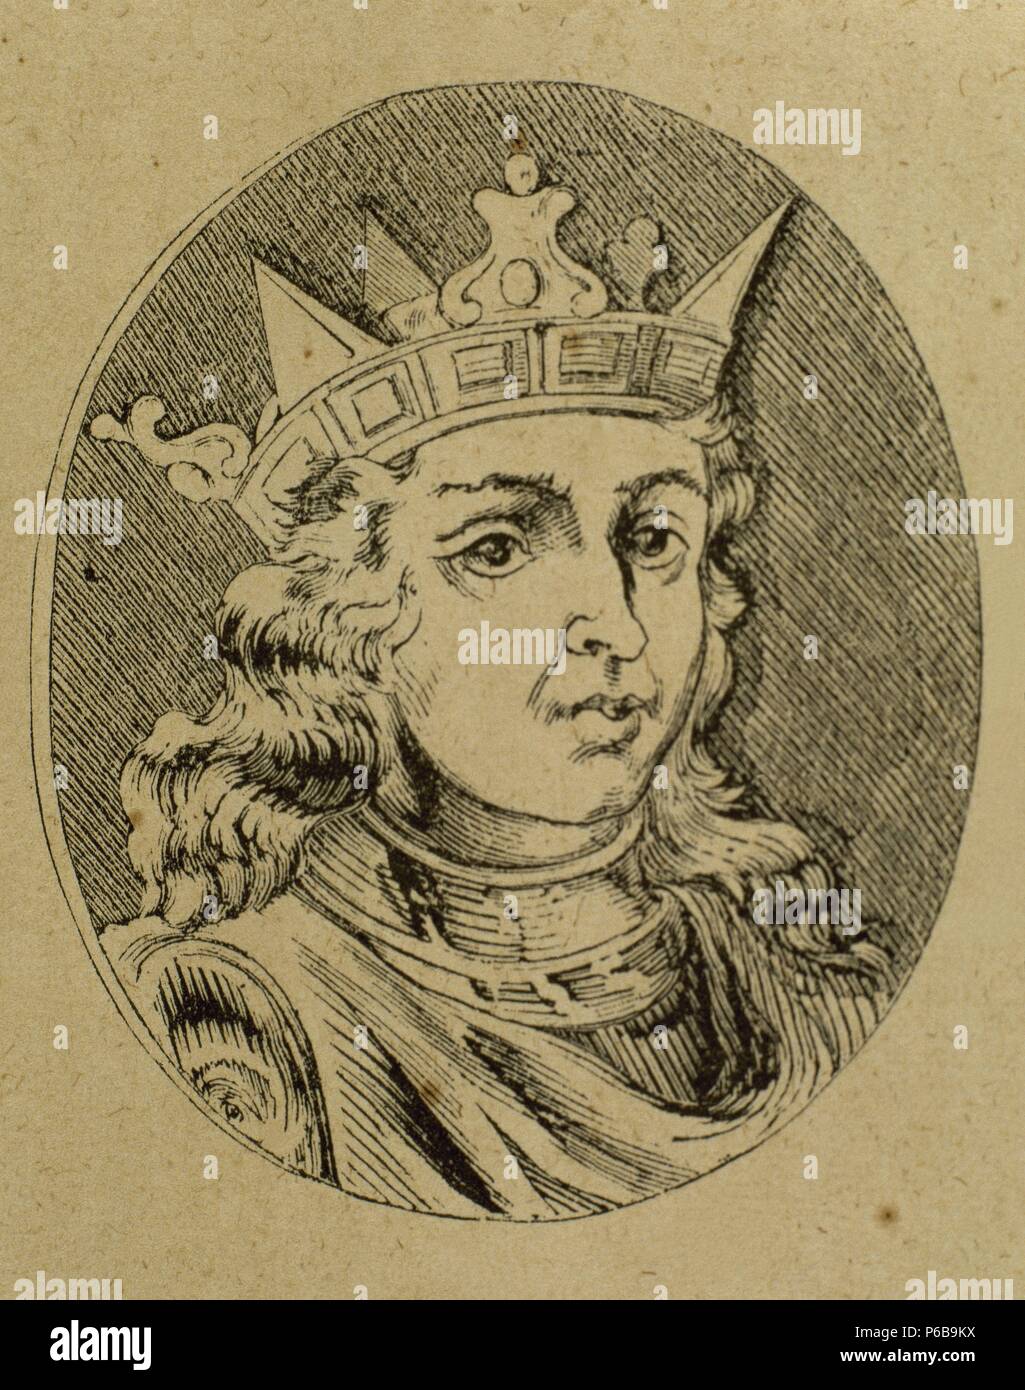 Bermudo III of Leo n (1017-1037). King of Leon (1028-1037). Engraving. Stock Photo